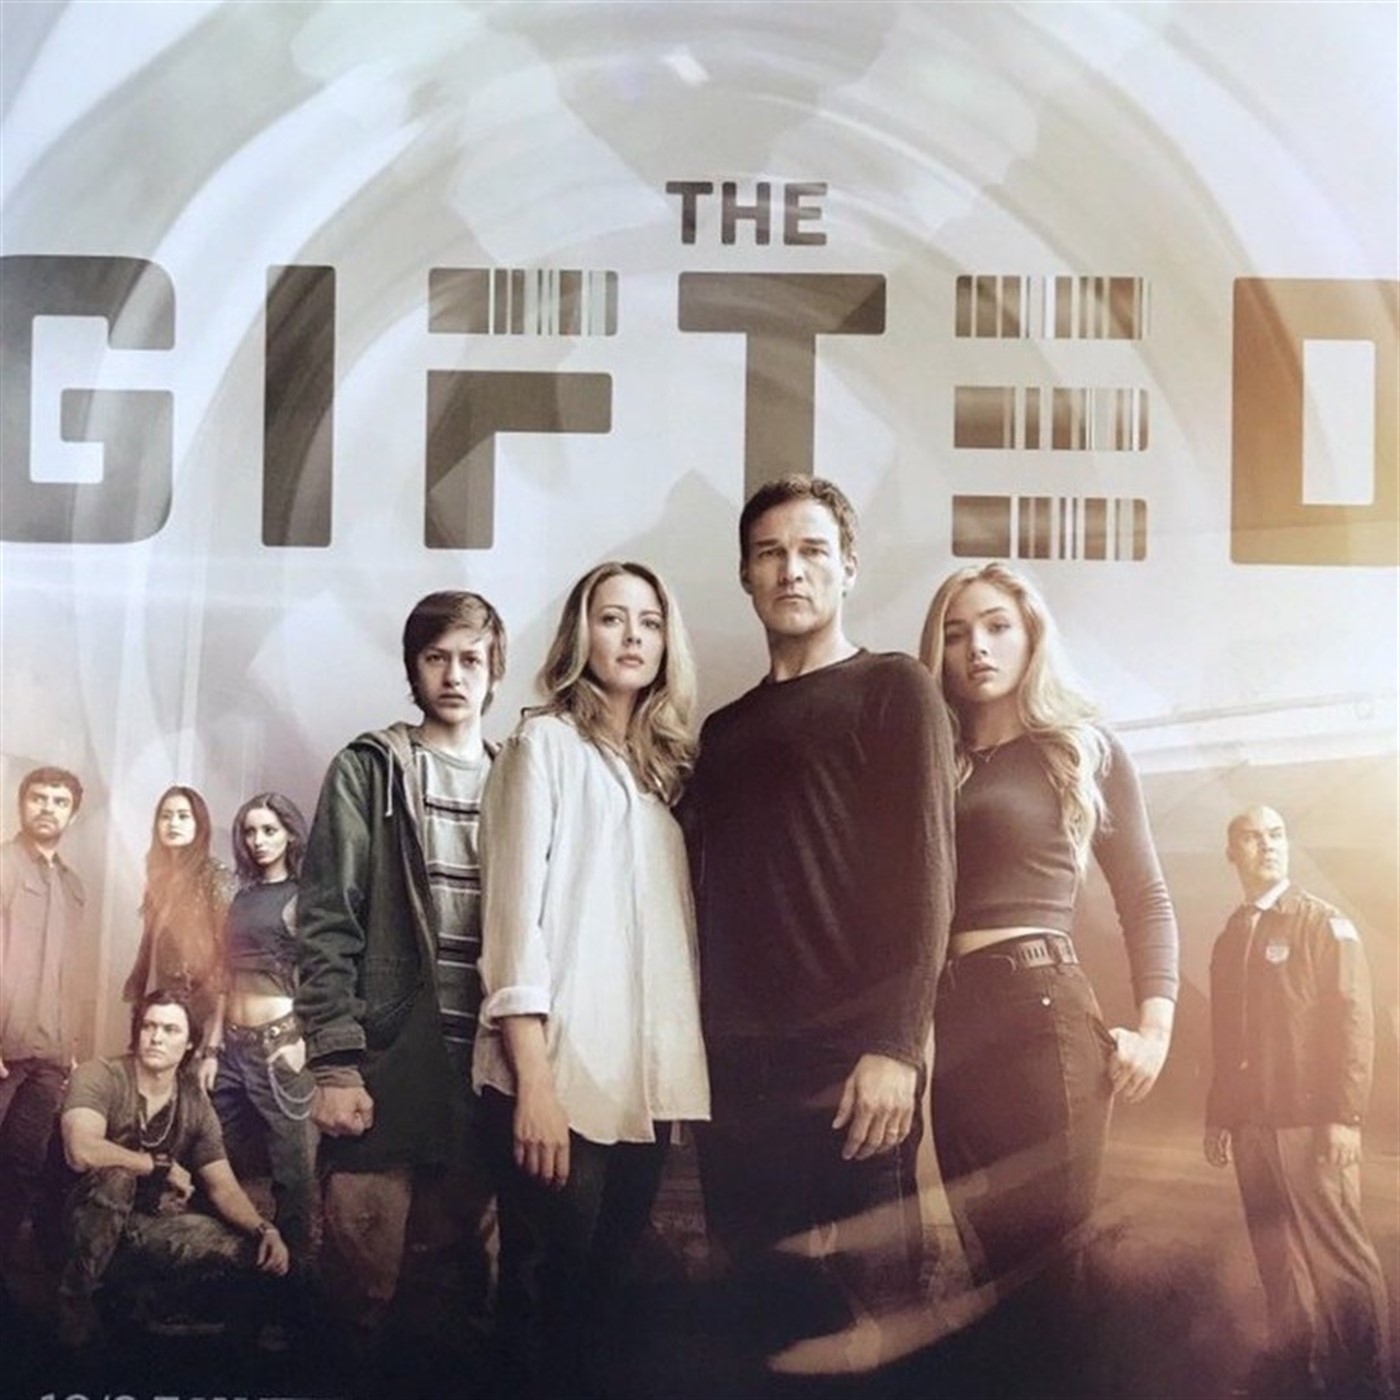 The Gifted Season 1